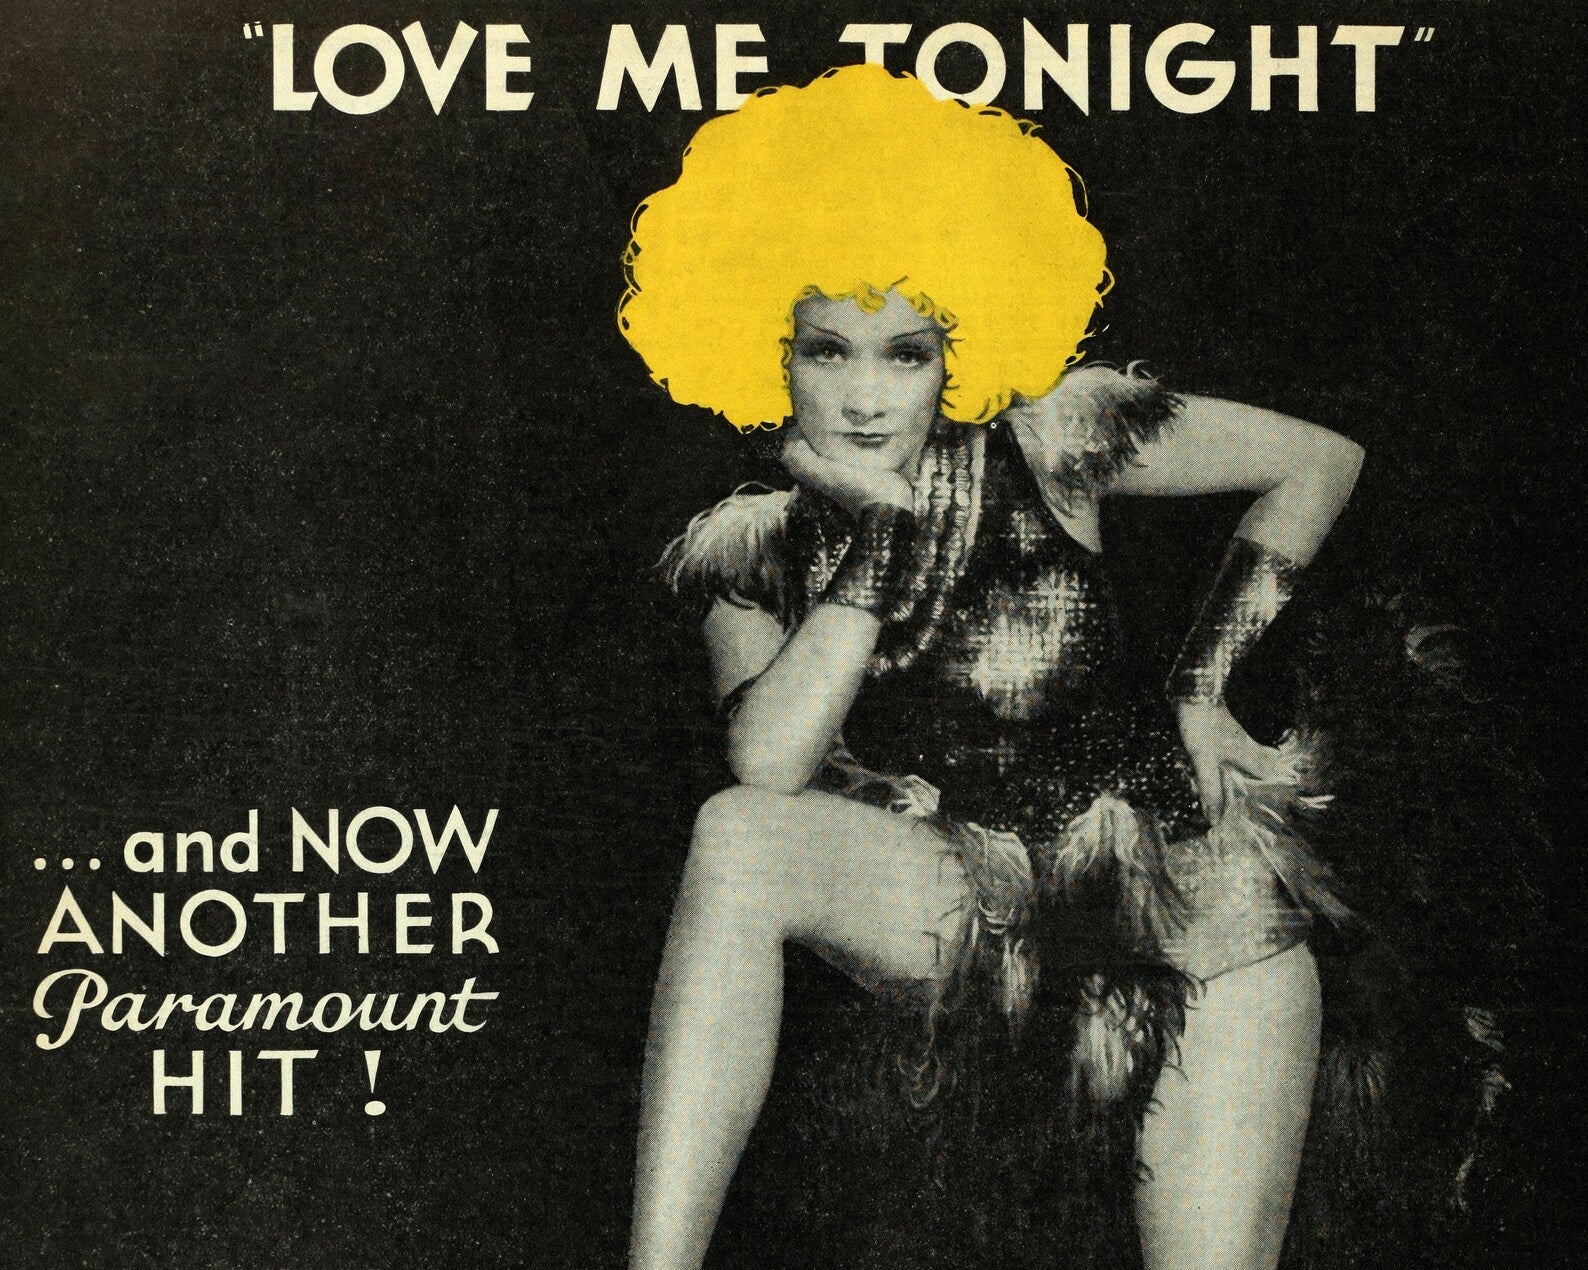 Vintage Movie Advertisement "Blonde Venus" (1932) - Mabon Gallery